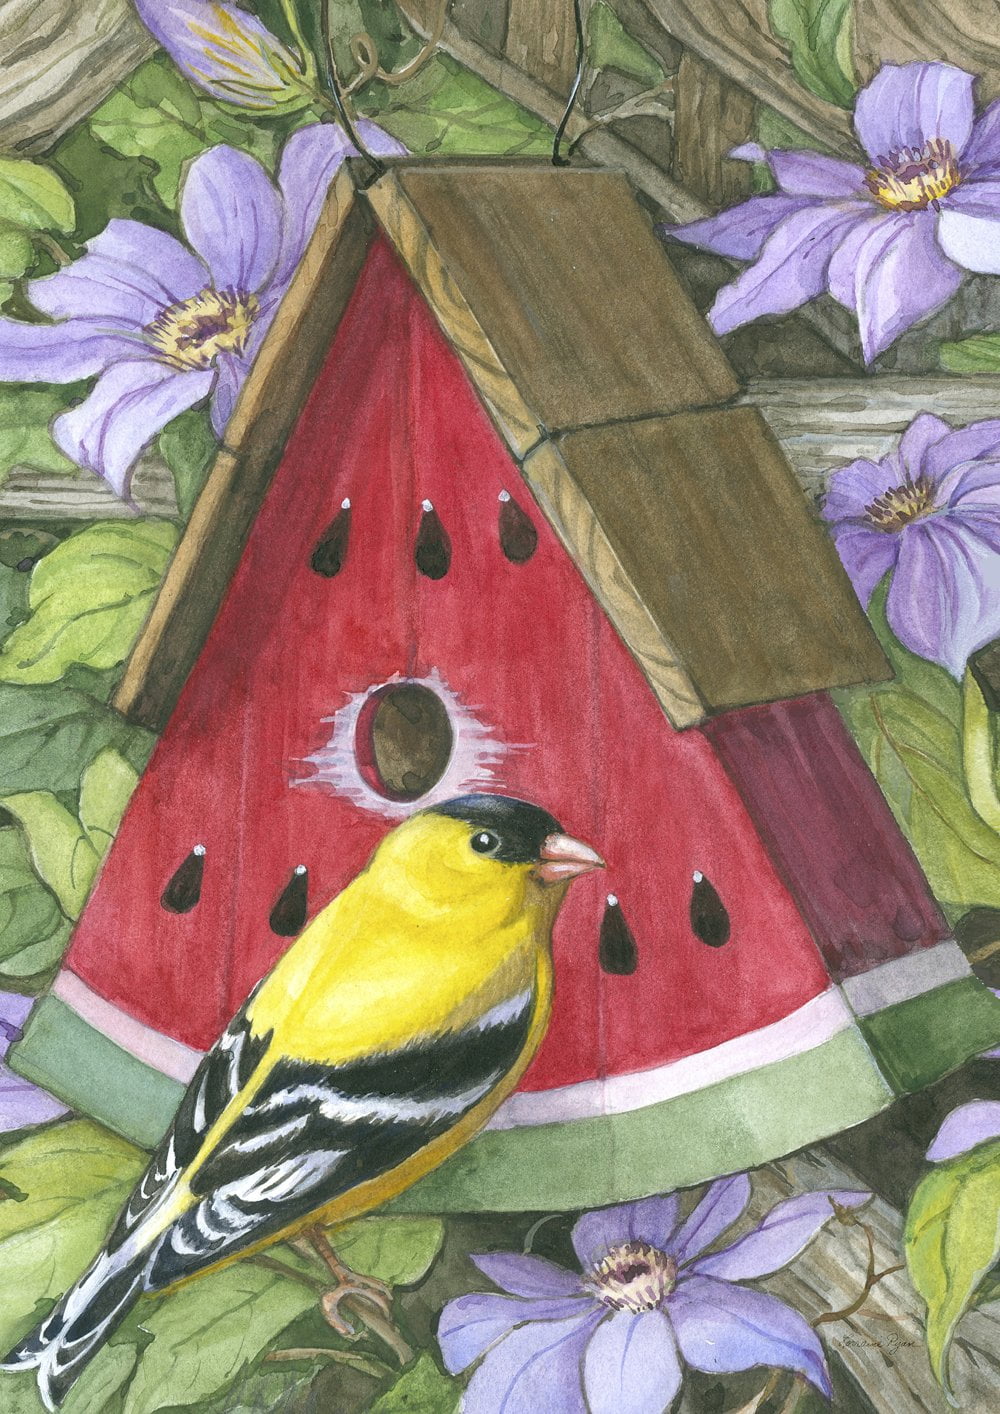 Details about   Toland "Bird Study" decorative 12.5 x 18 Natures garden size flag 